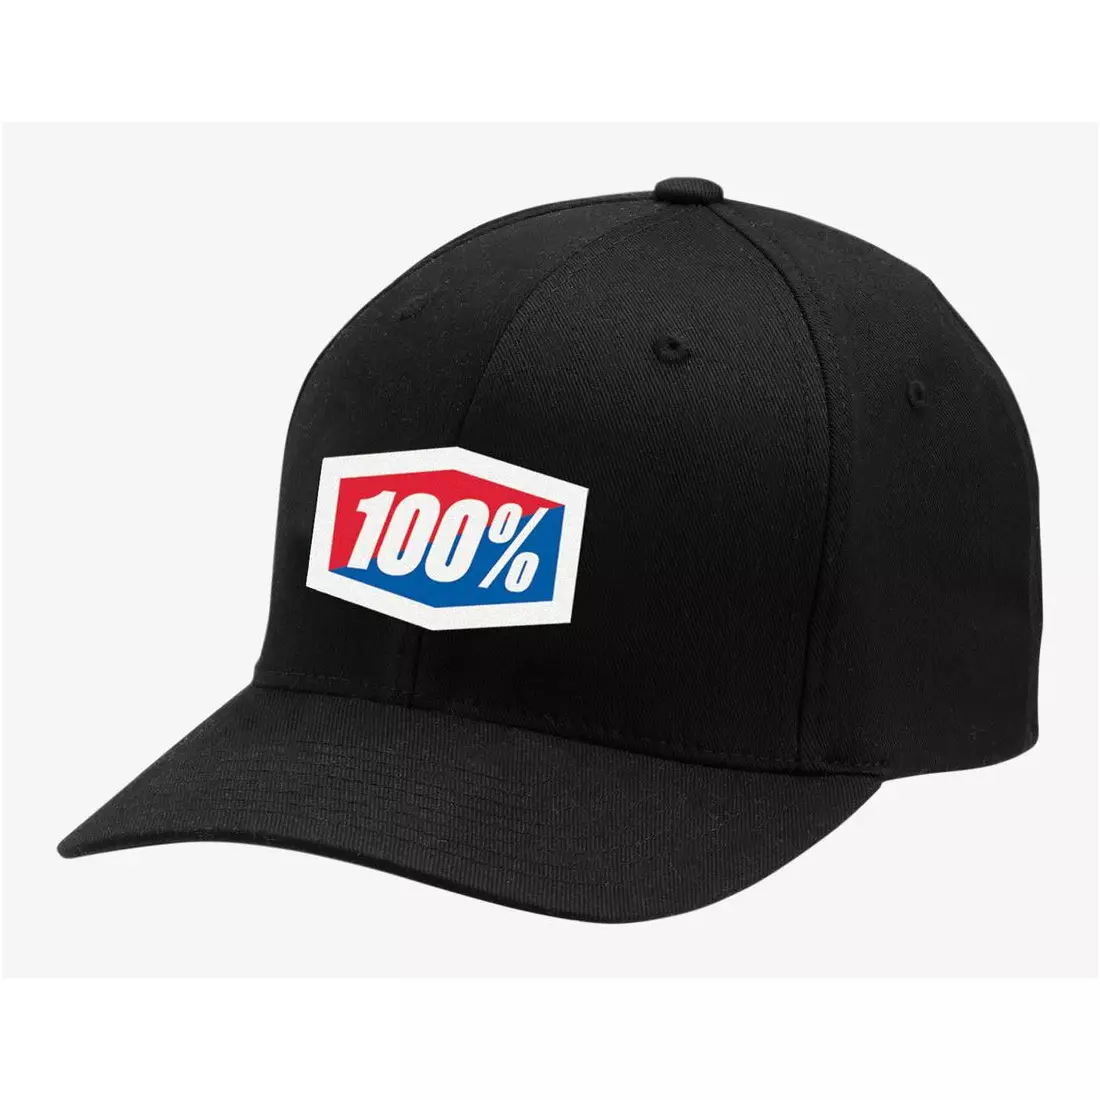 100% baseball sapka official x-Fit  flexfit hat black STO-20037-001-17